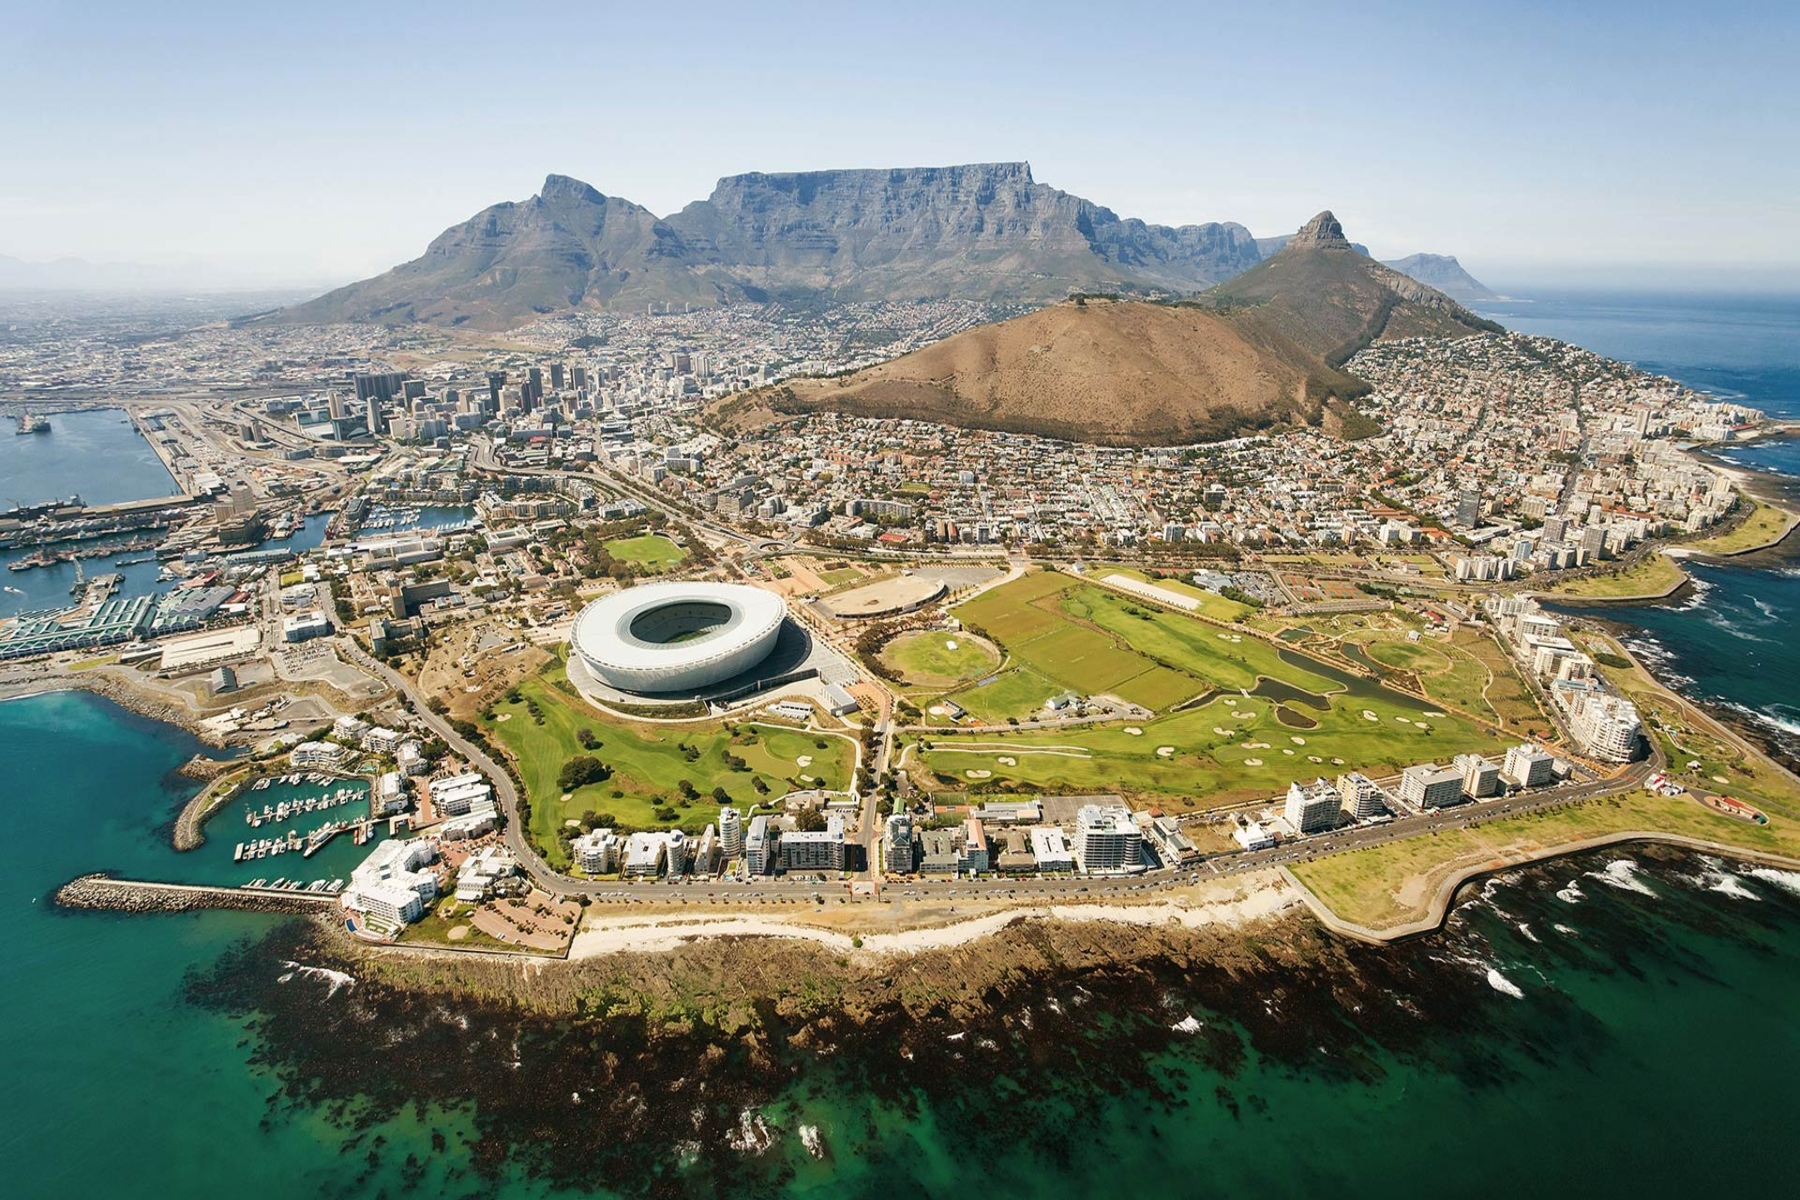 Cape Town γαστρονομία: Τι μπορείτε να φάτε αν επισκεφθείτε το Cape Town;